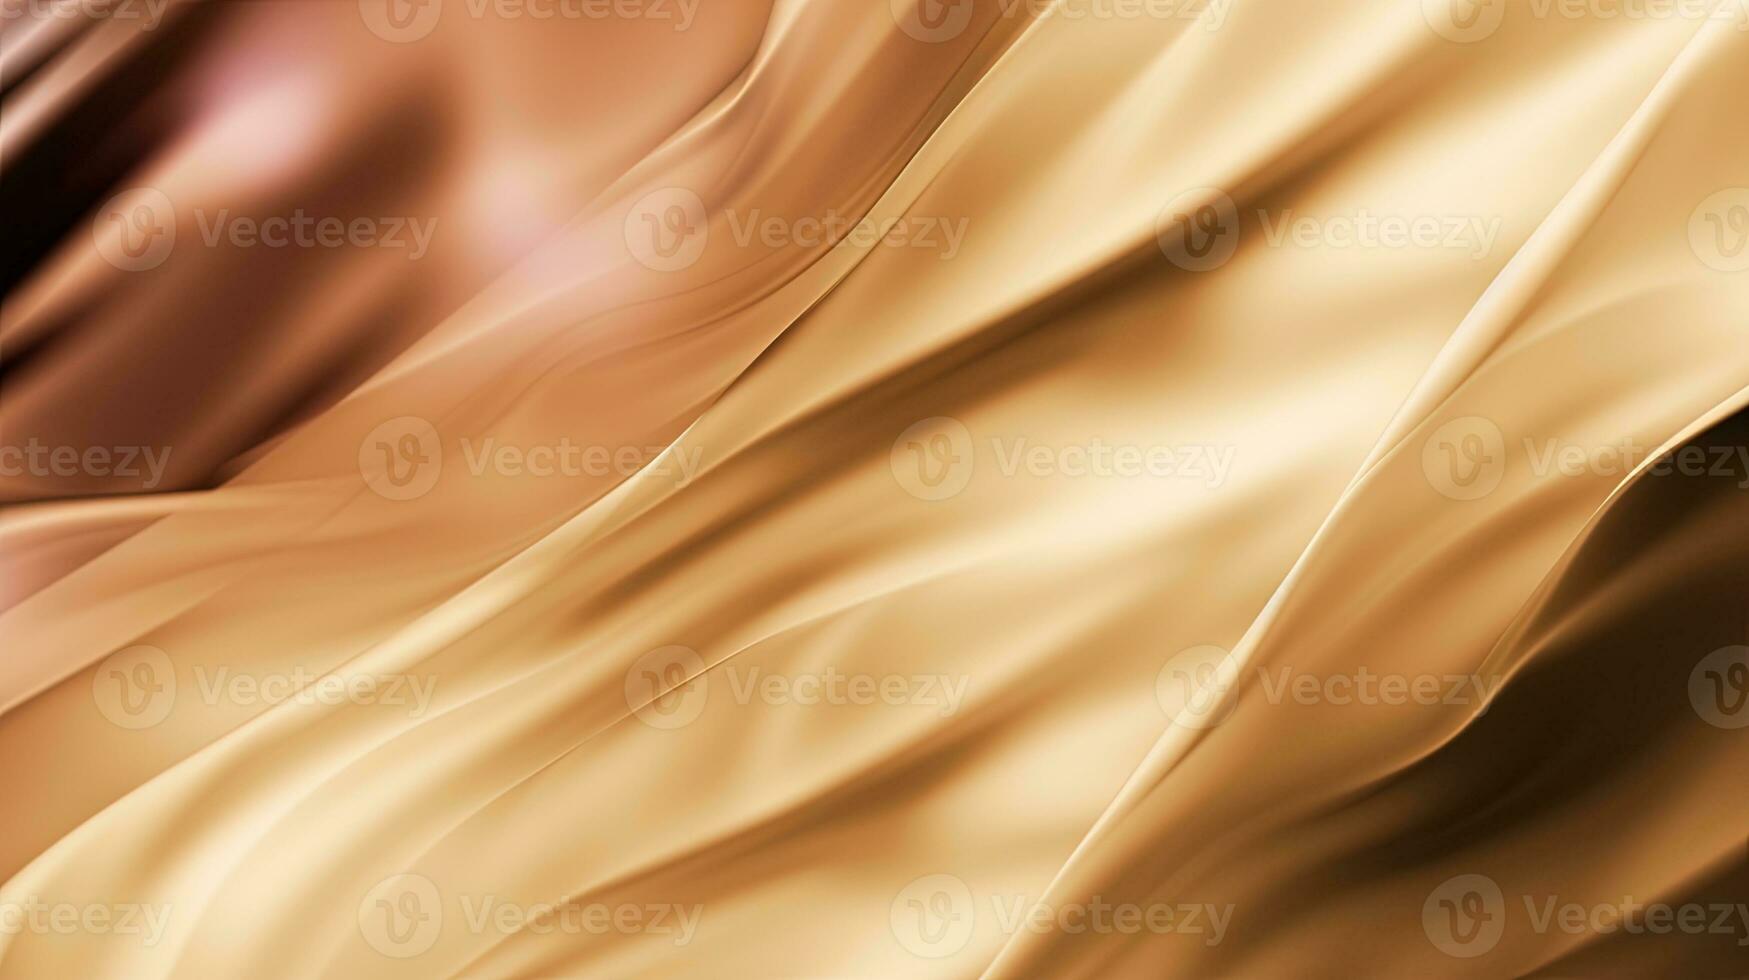 oro satín tela textura antecedentes. de cerca de ondulado dorado seda tela. 3d hacer ilustración foto